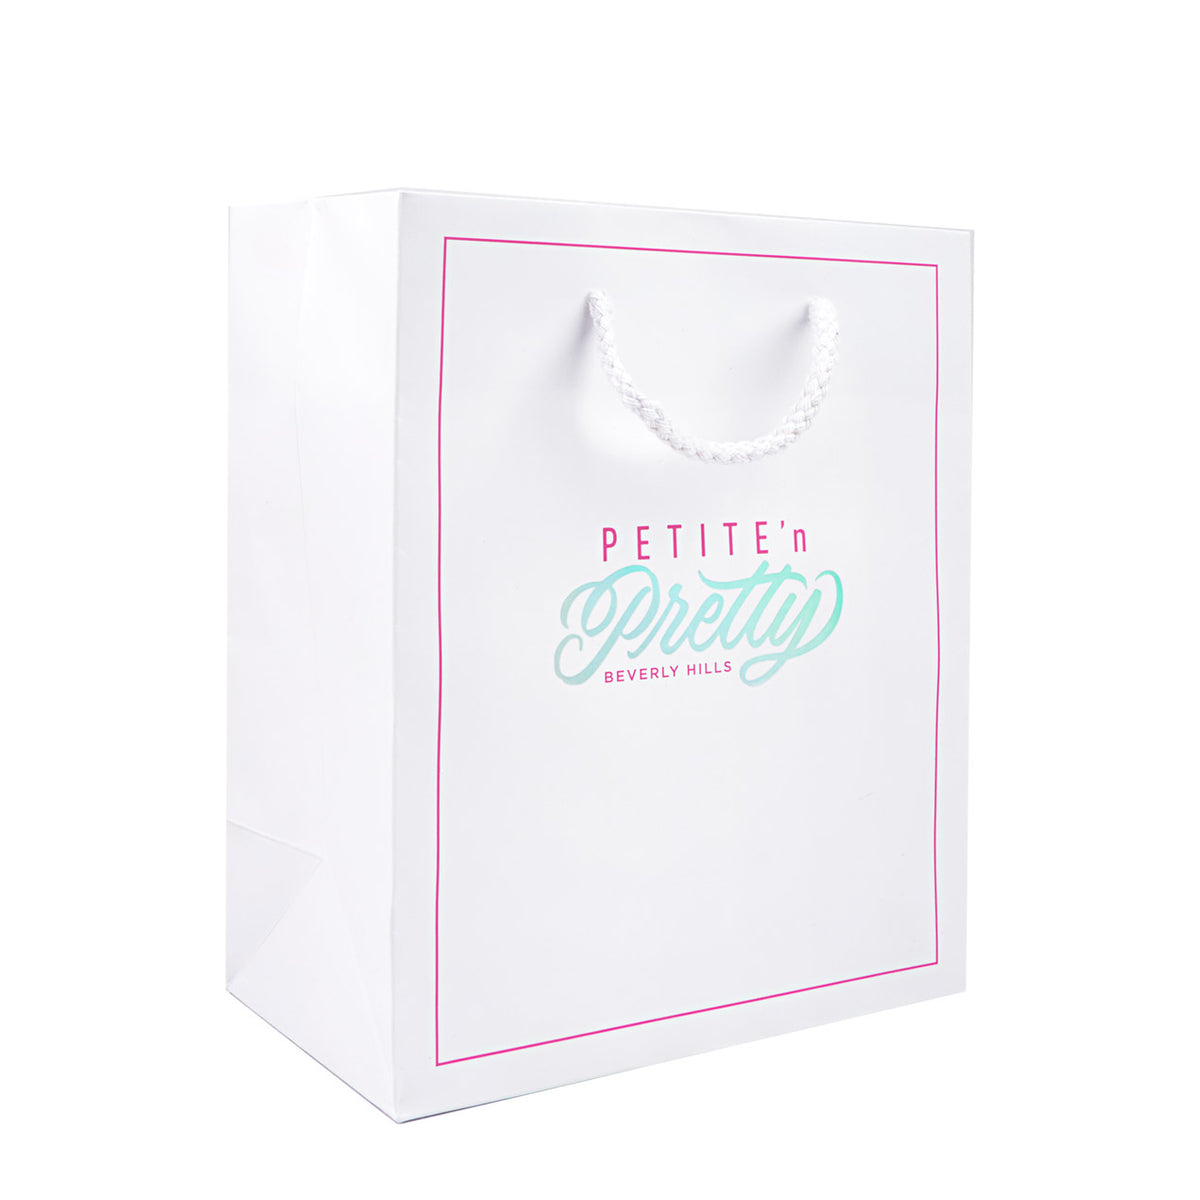 Petite 'n Pretty Gift Bag - Petite 'n Pretty - A beauty brand